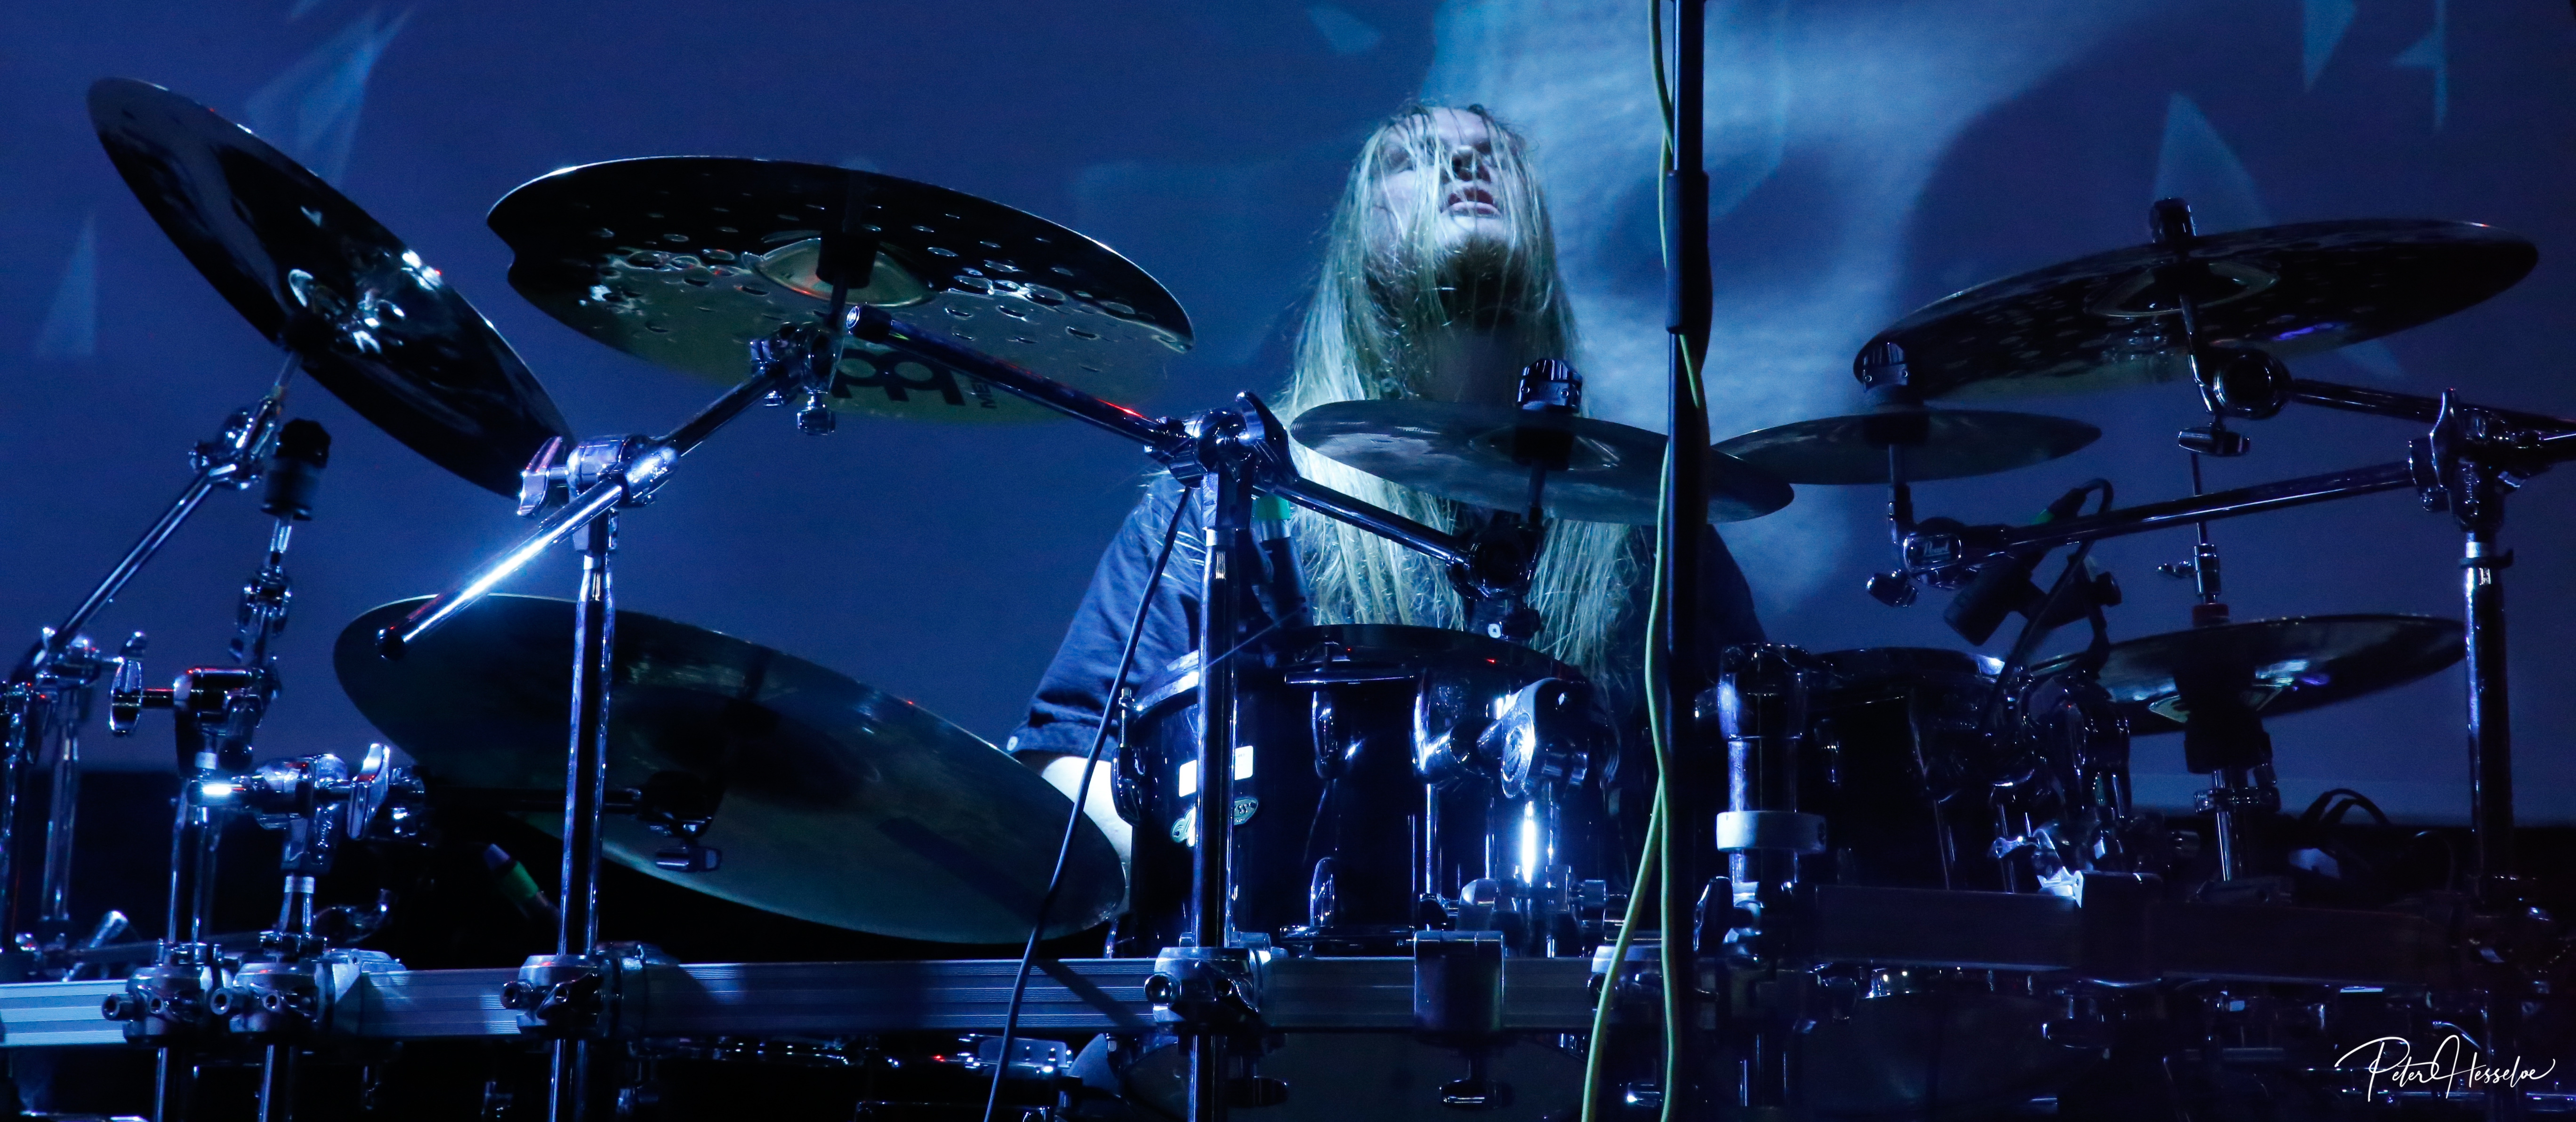 Ethereal Kingdoms live with Finntroll. Jon Elmquist drummer behind drumset.